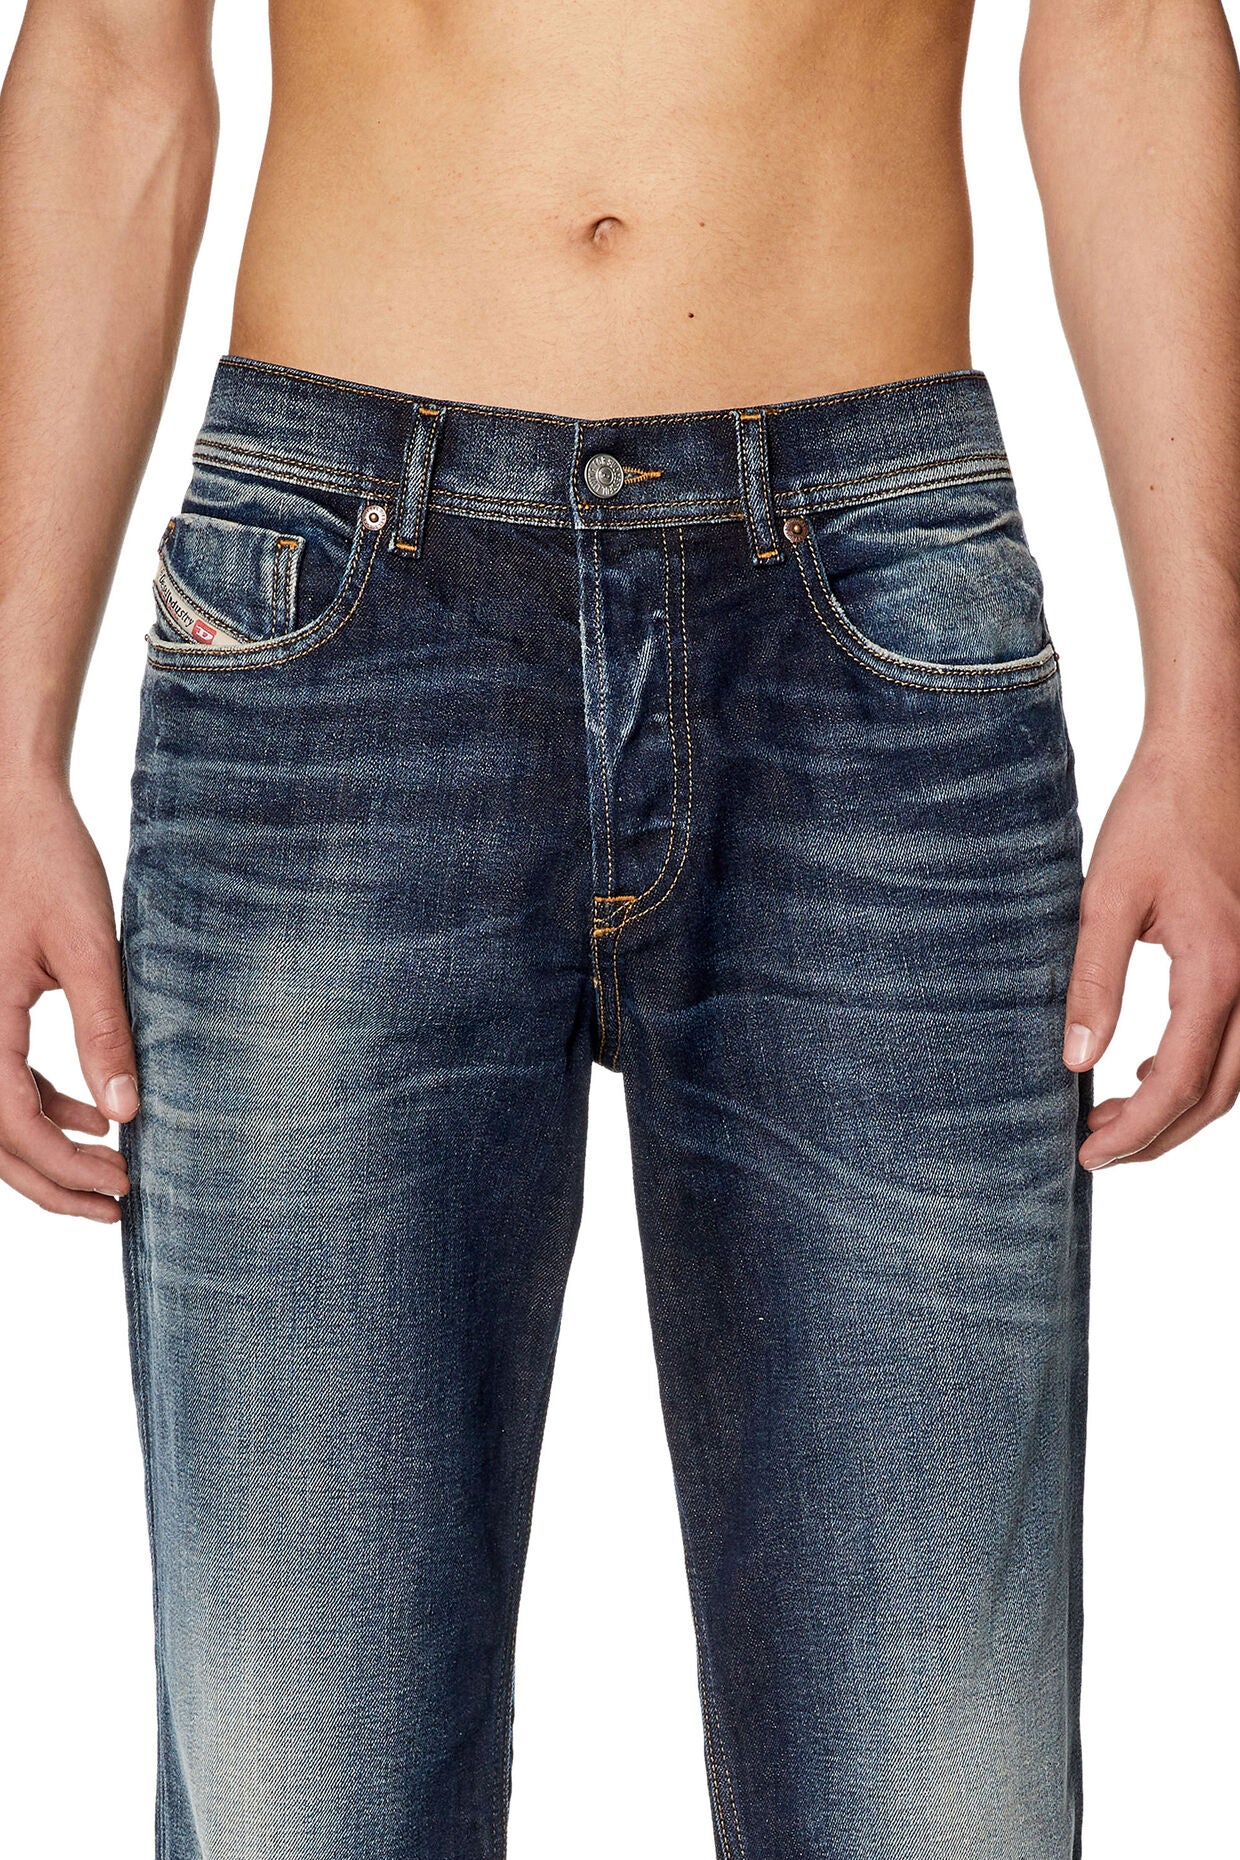 Diesel Men's Tapered Fit Jeans